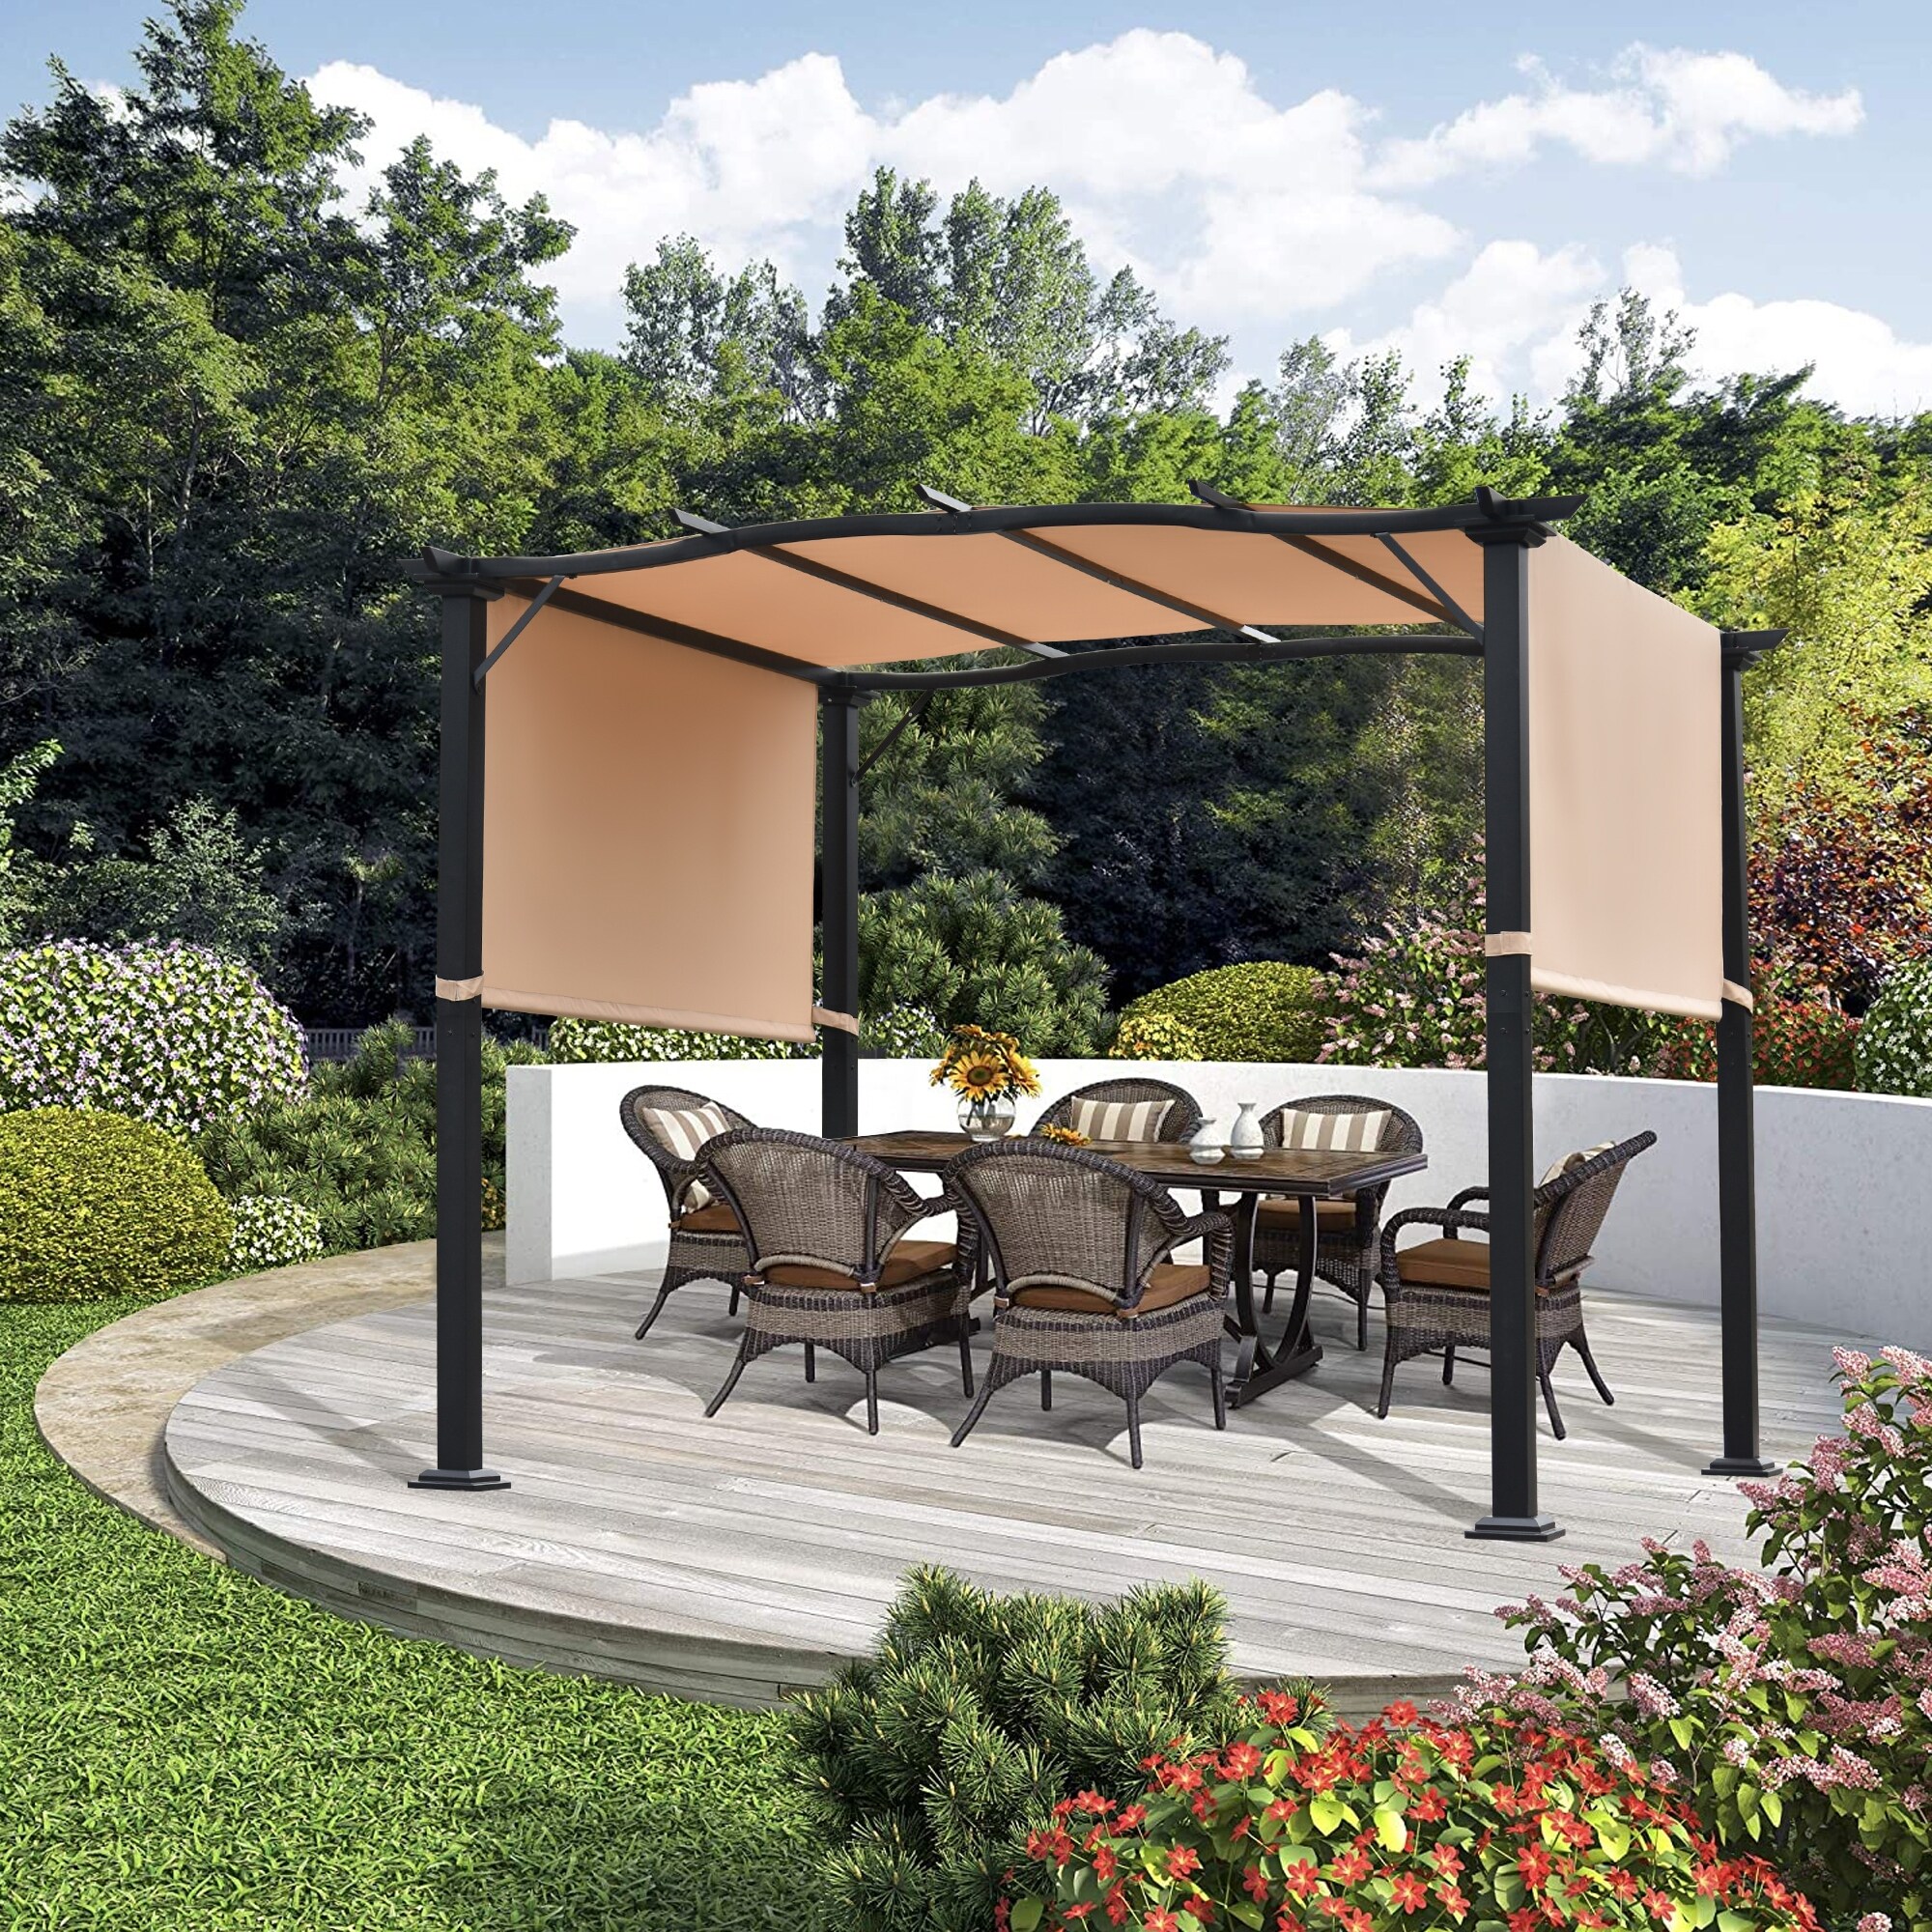 CoastShade 10x8 Pergola Gazebo Canopy Outdoor Patio Garden Steel Frame Sun Shelter with Retractable Canopy Shades，Beige